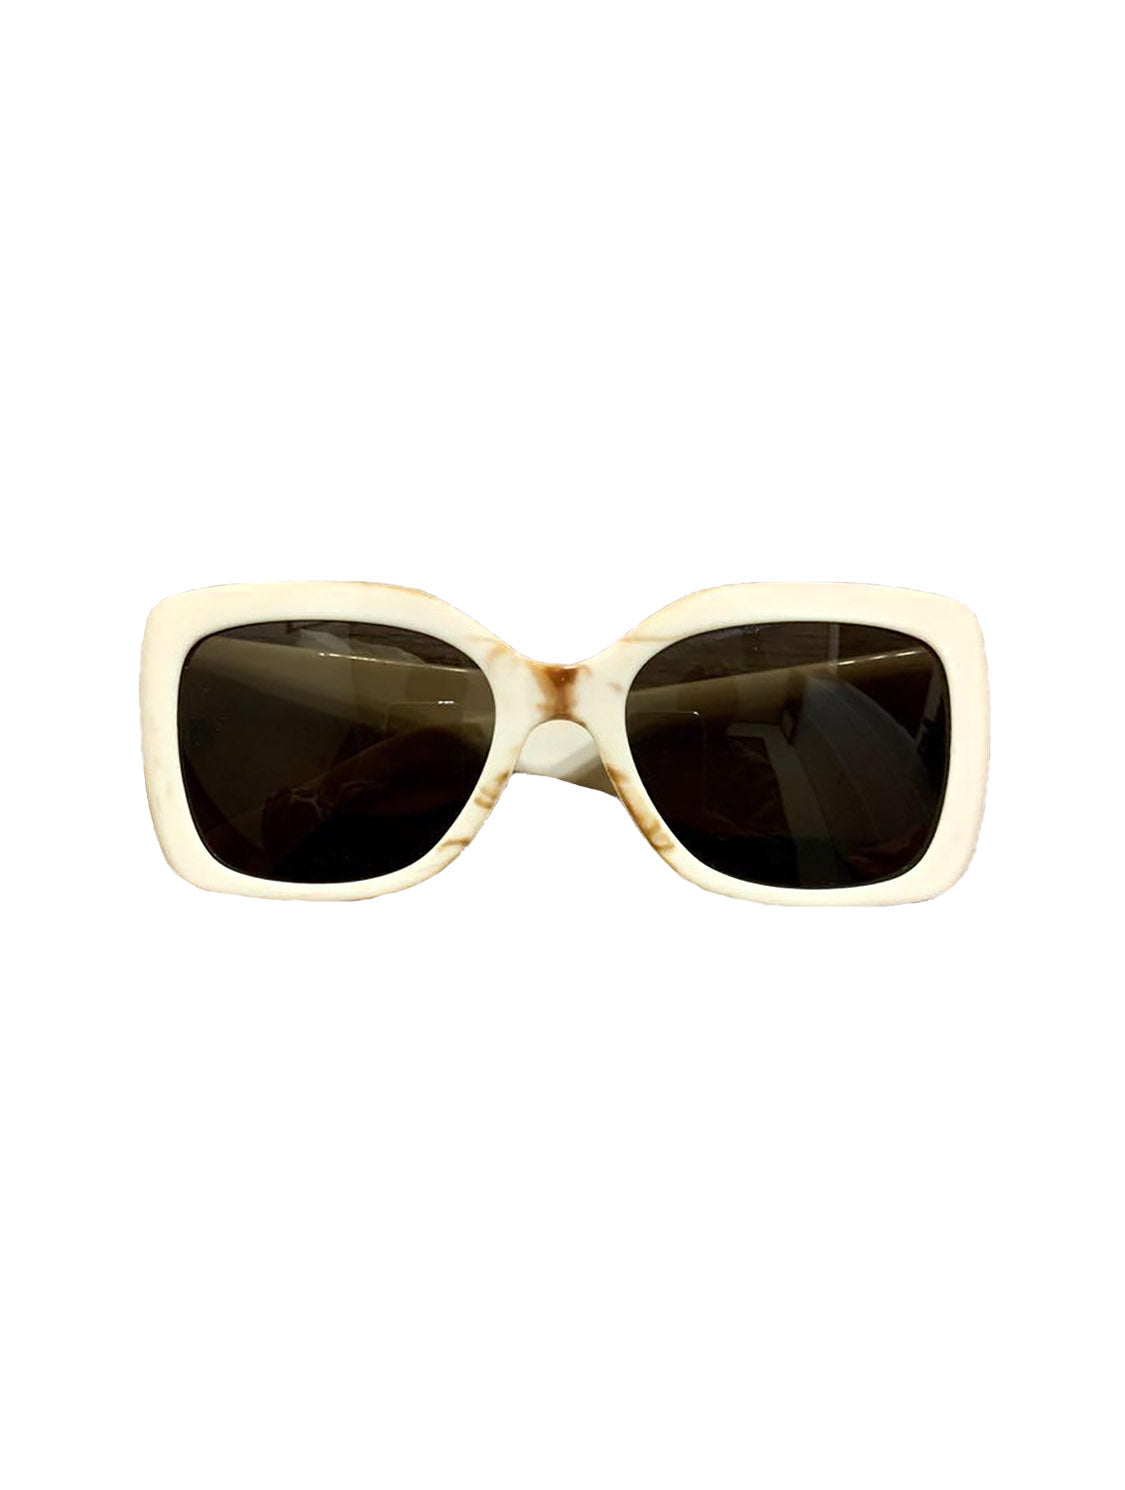 CHANEL Sunglasses Vintage Rare Gold Oval Rectangular Square 